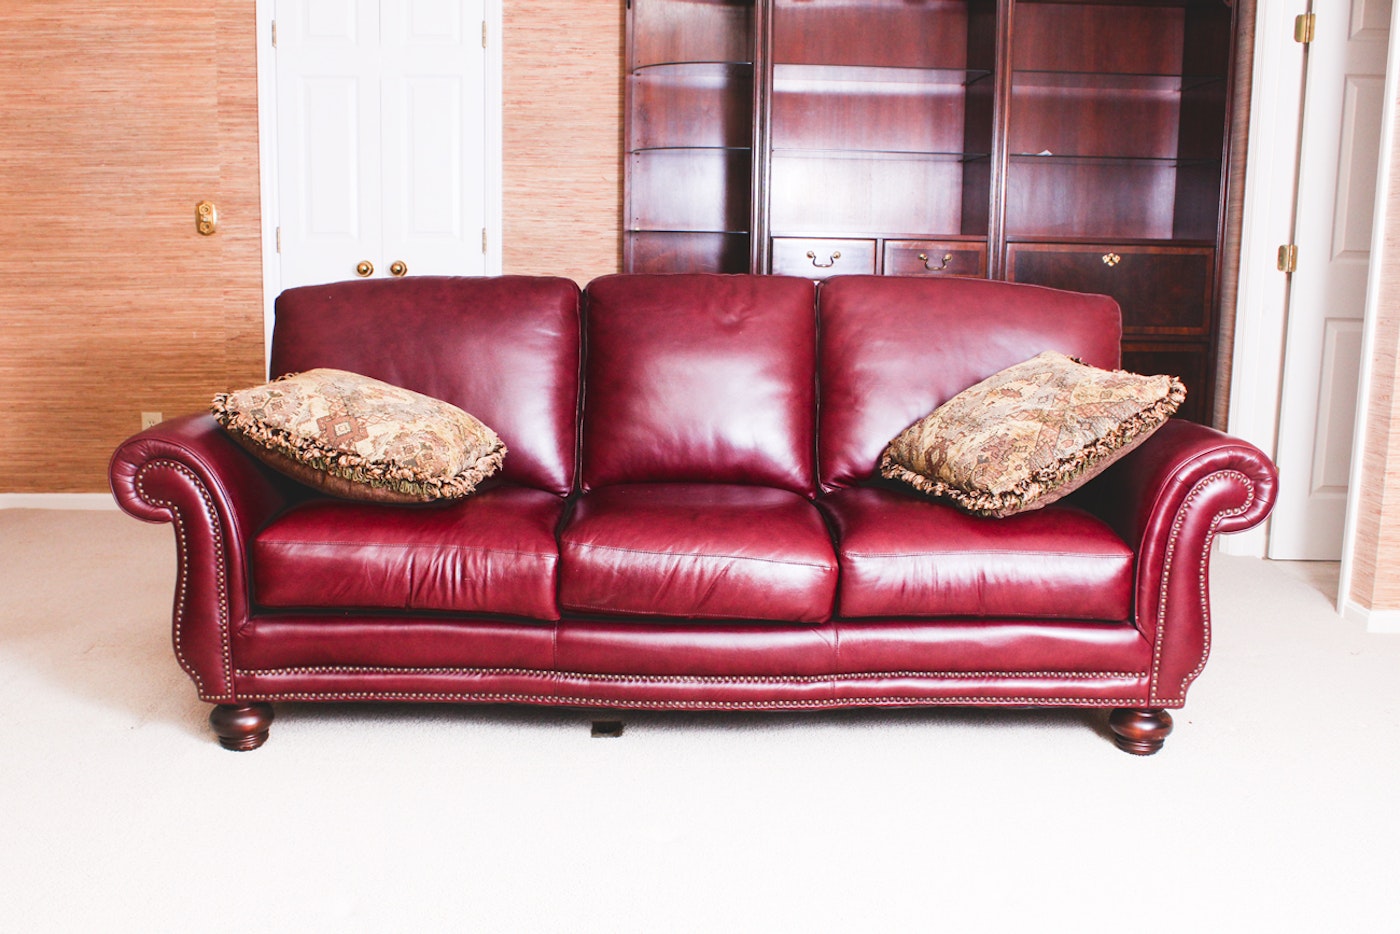 used burgundy leather sofa studs